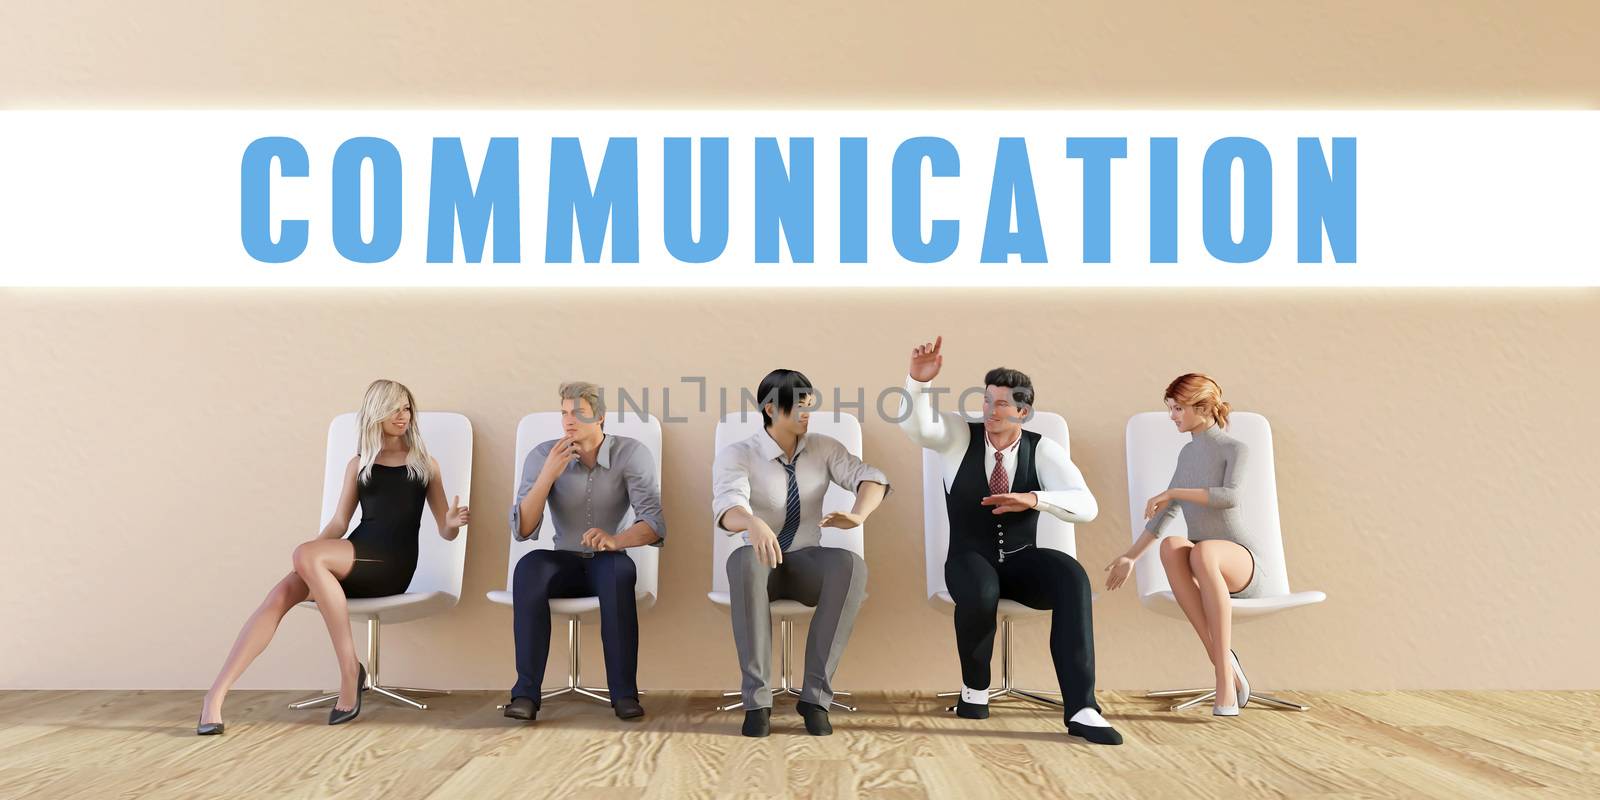 Business Communication by kentoh